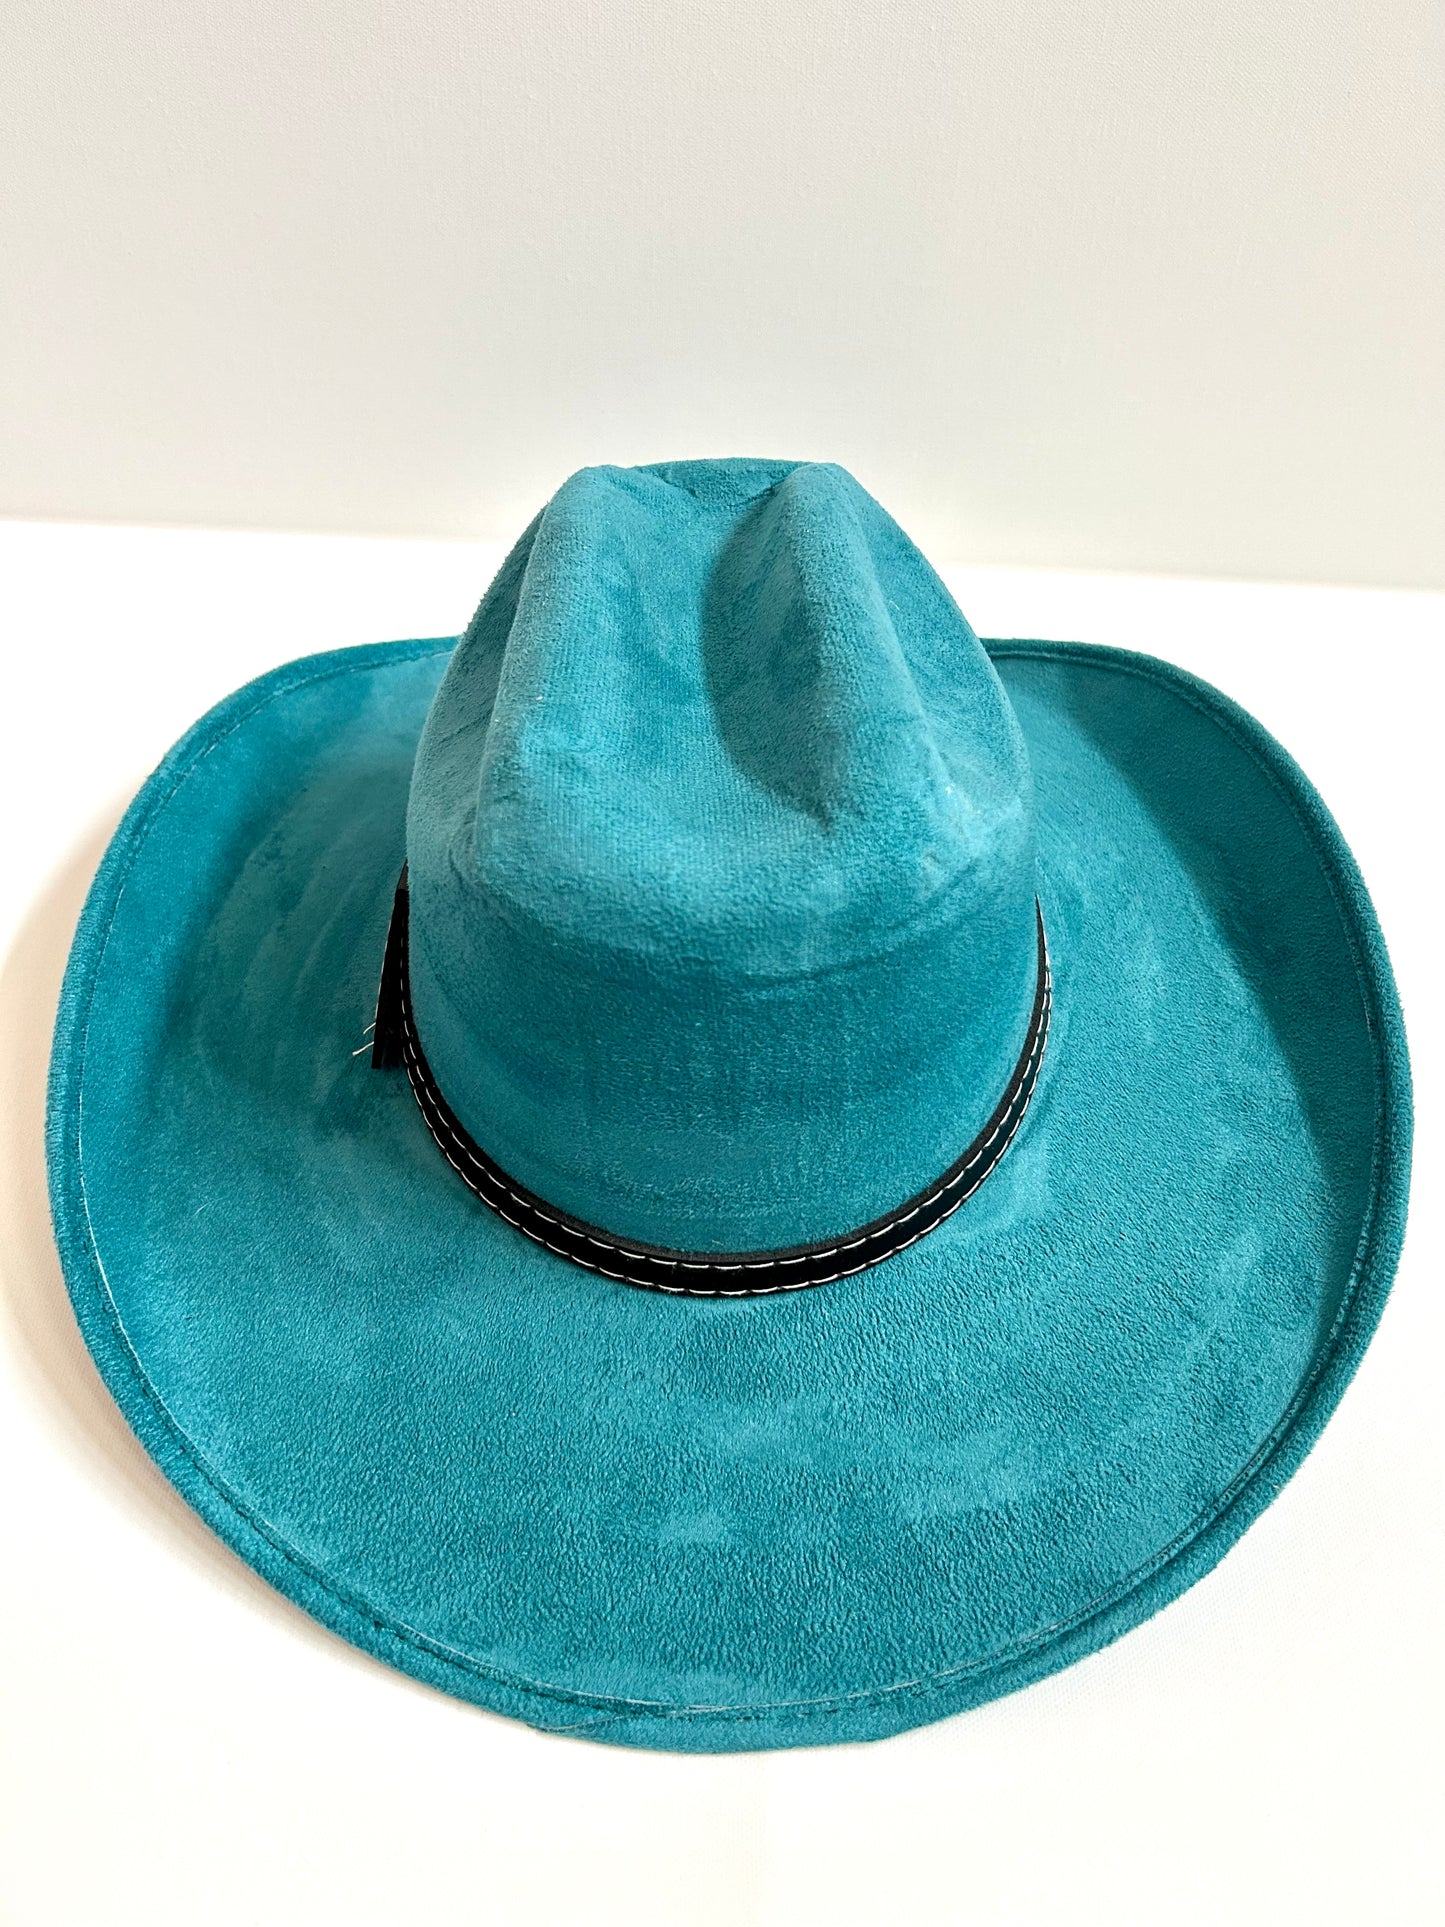 Imperfect Vegan Suede Hat - Austin - Teal Blue